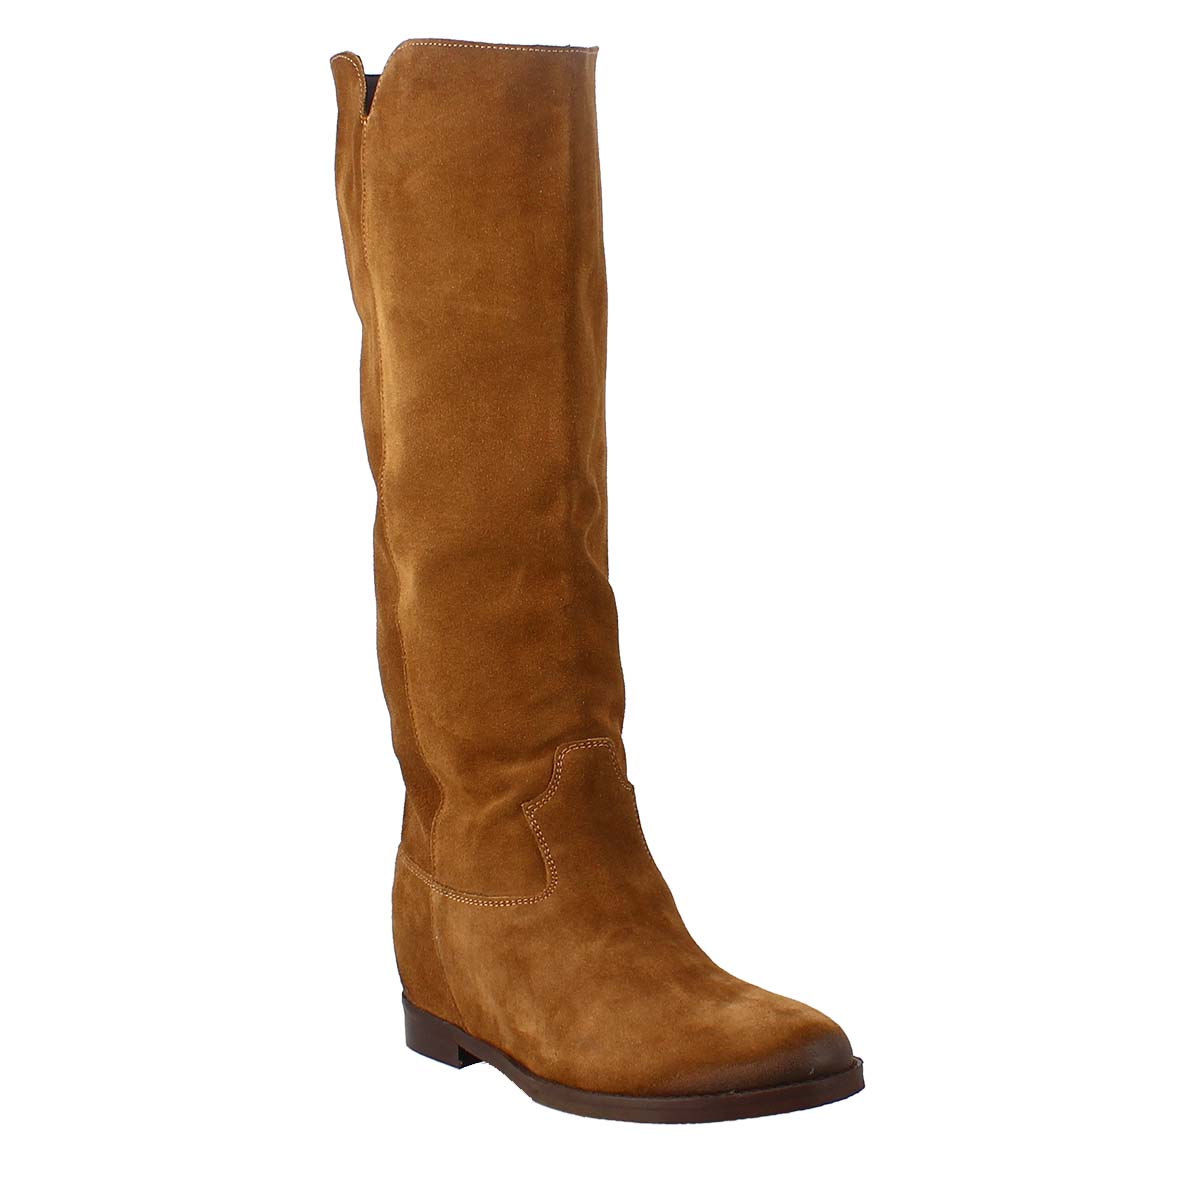 Low heel knee boot in brown suede leather